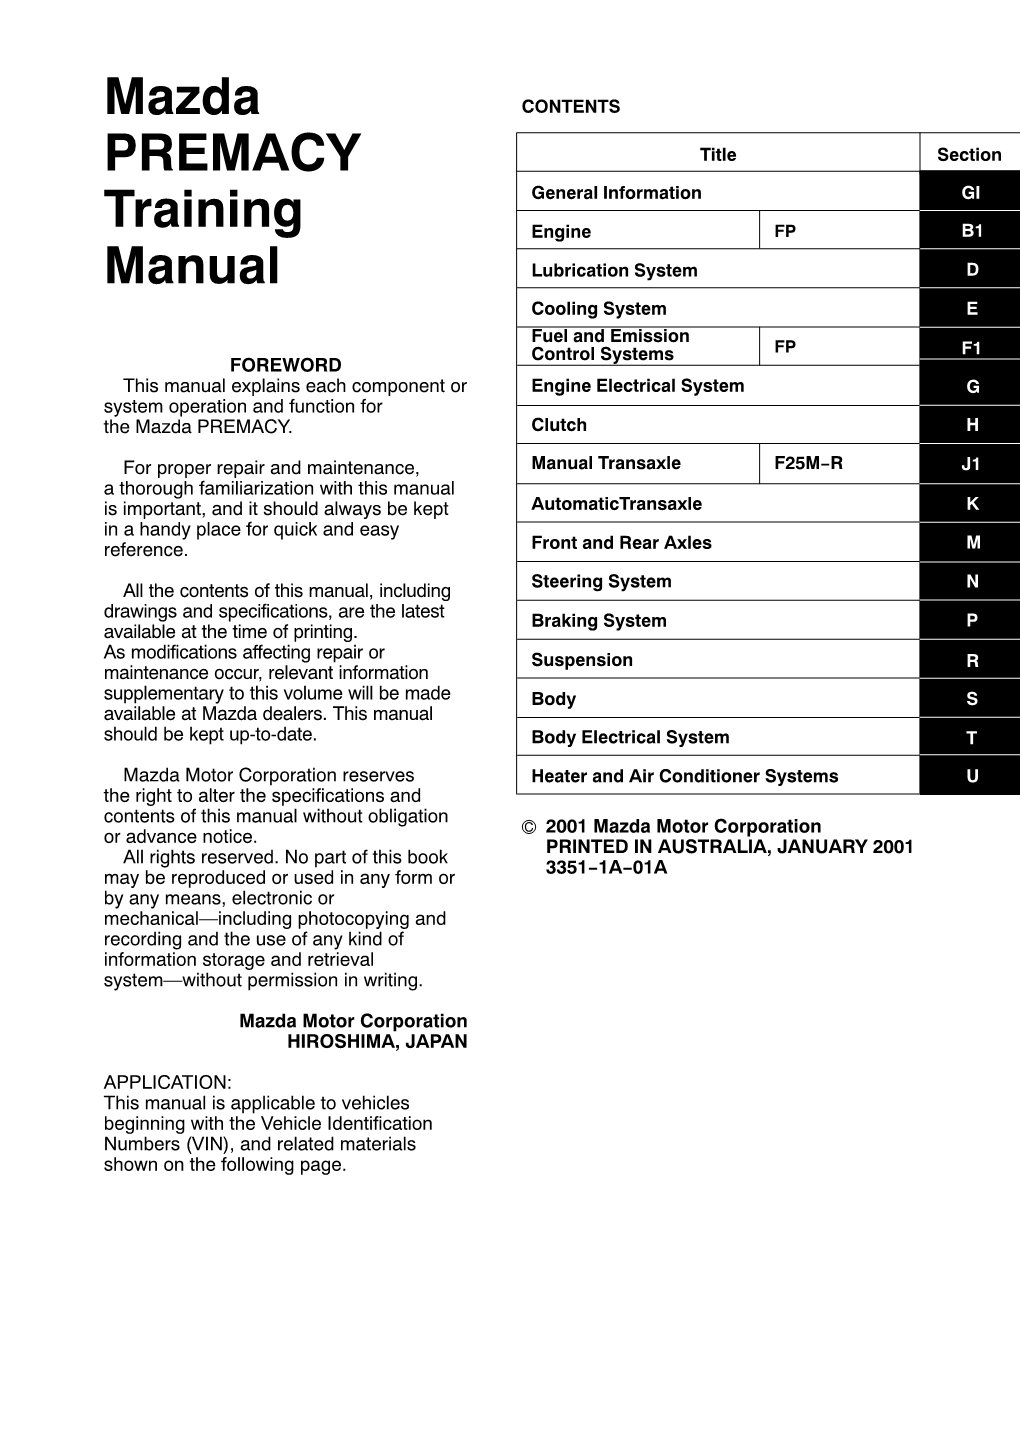 Mazda PREMACY Training Manual